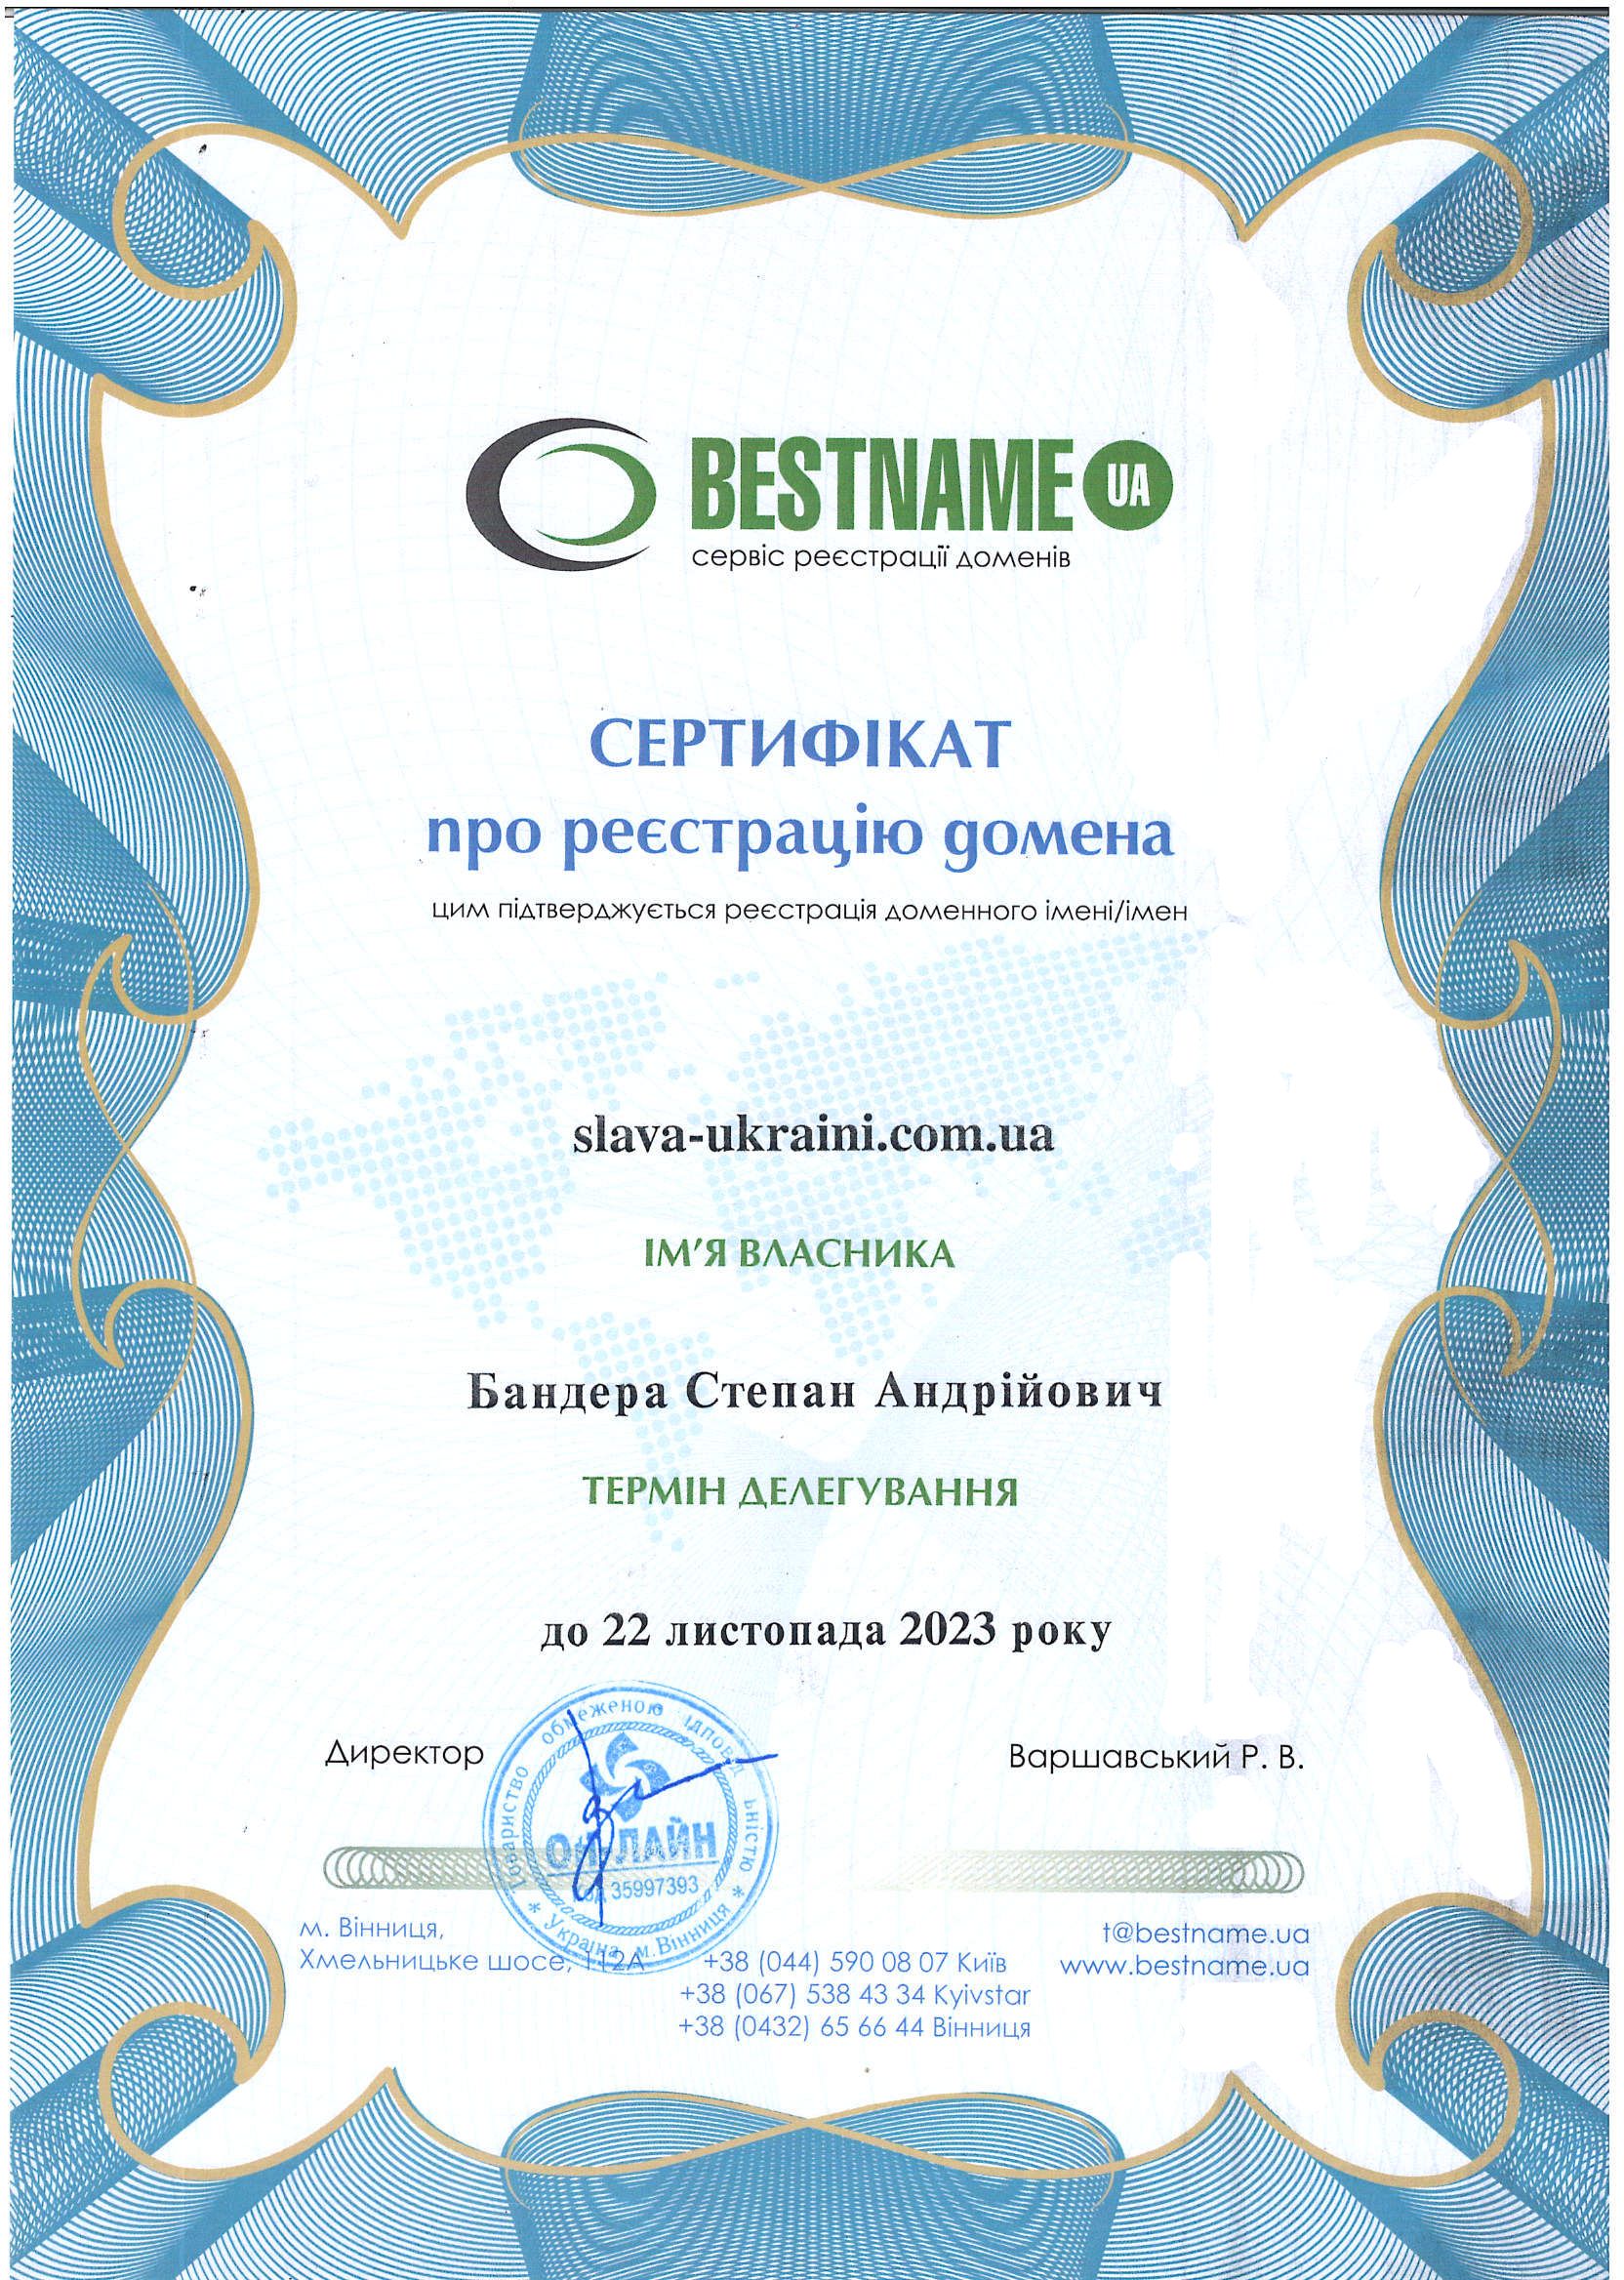 Domain certificate example Образец сертификата